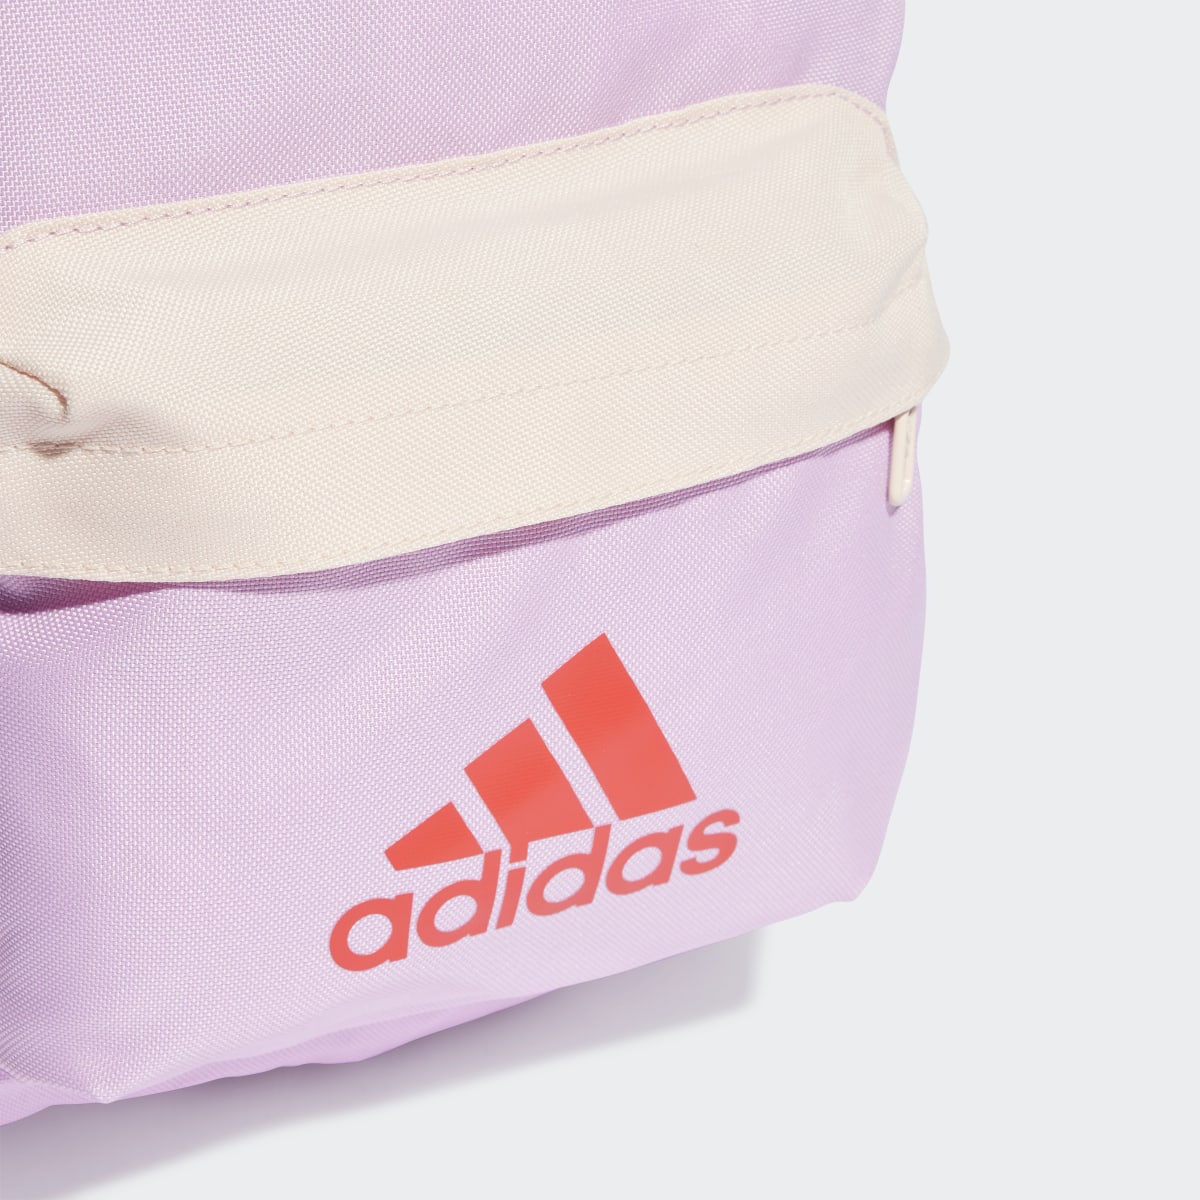 Adidas Backpack. 6